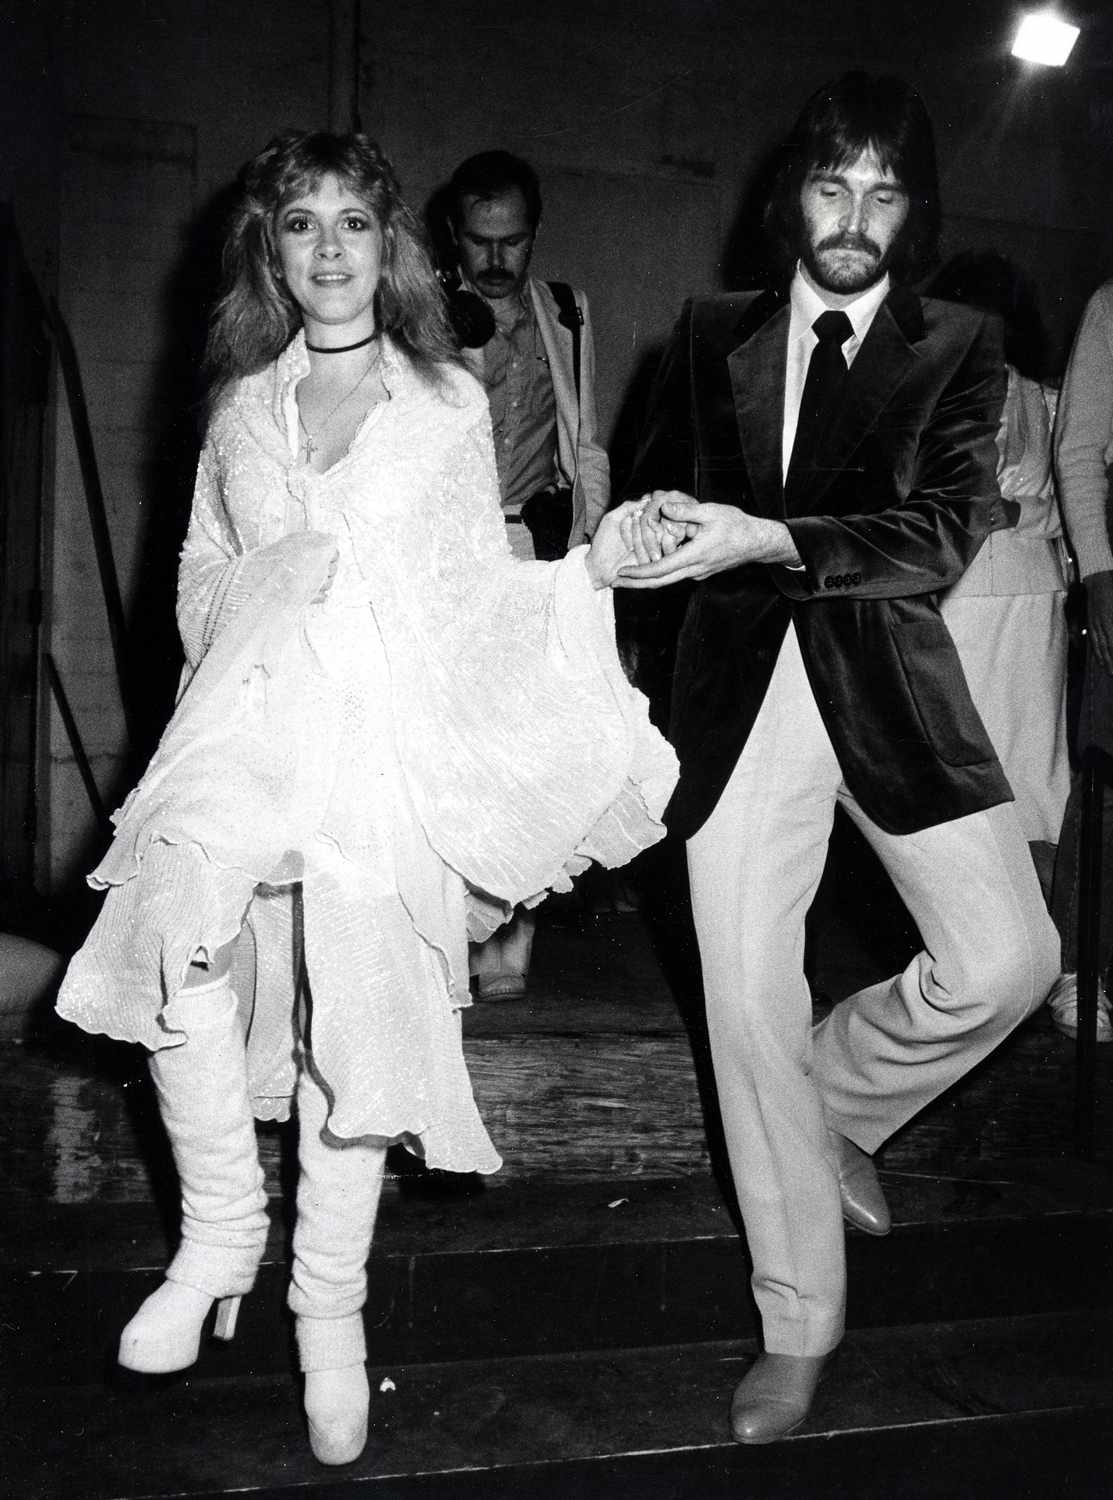 Stevie Nicks of Fleetwood Mac and husband Kim Anderson